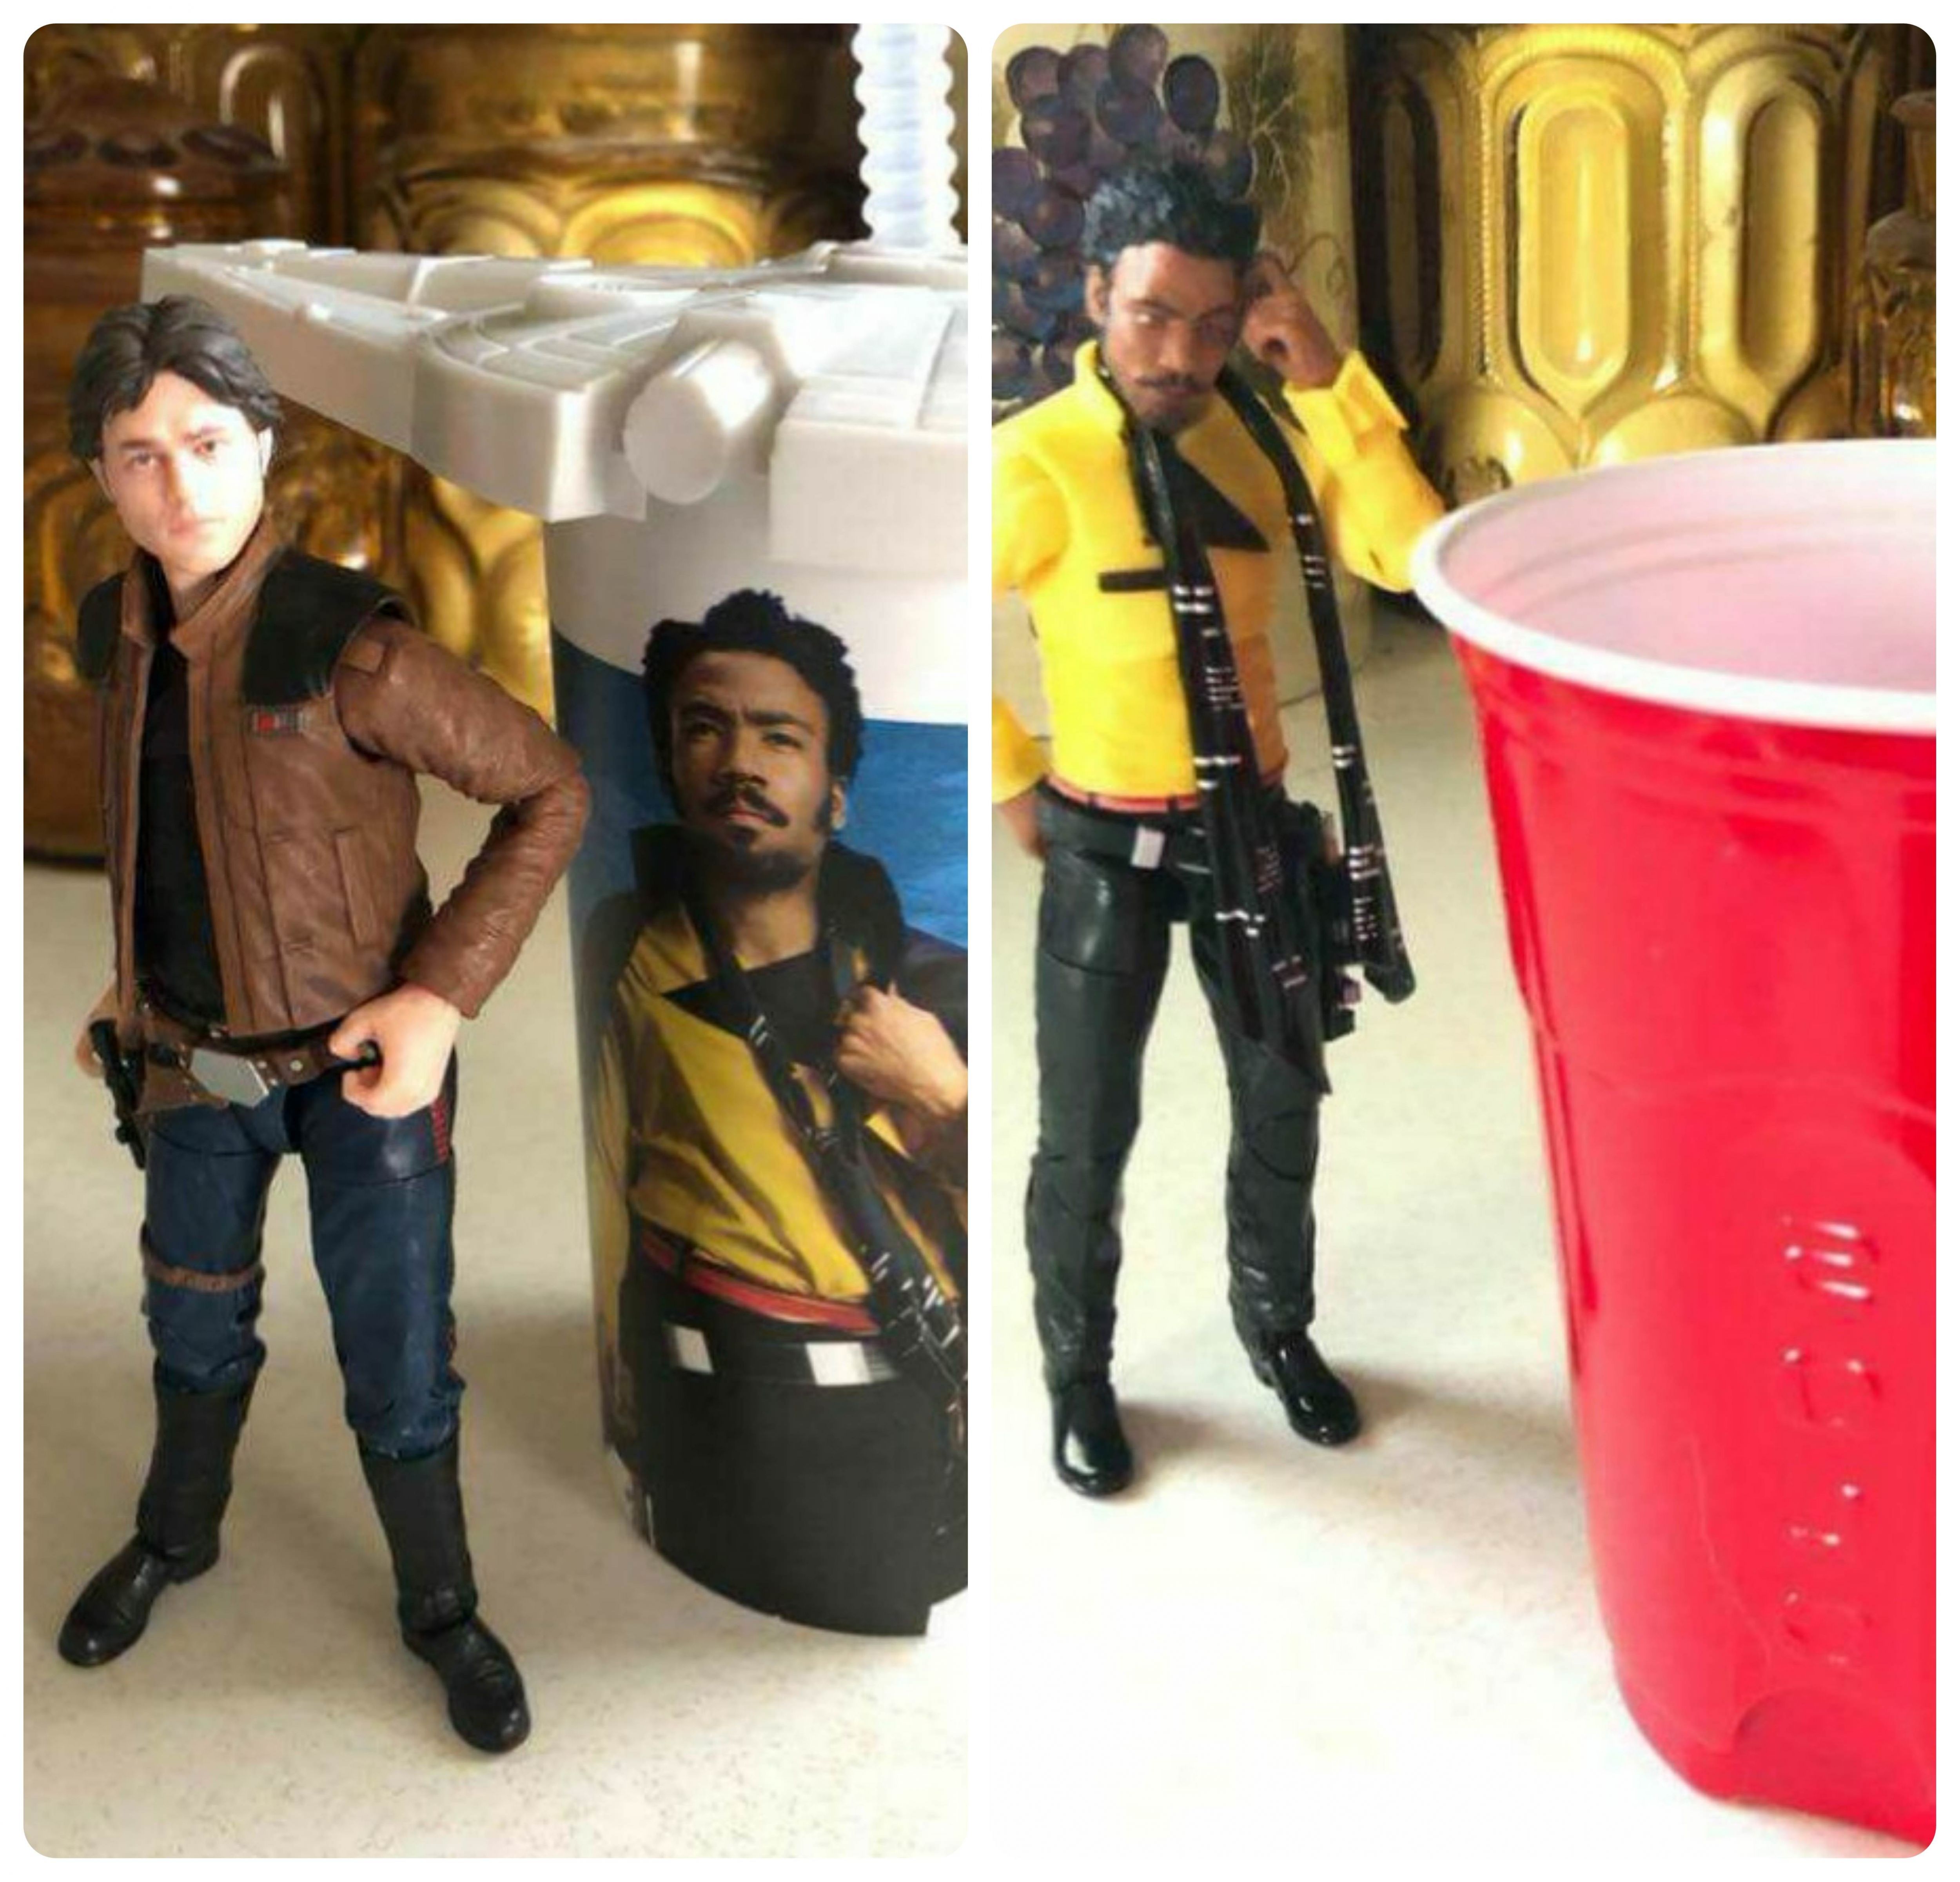 Solo next to a Lando cup, and vice versa.